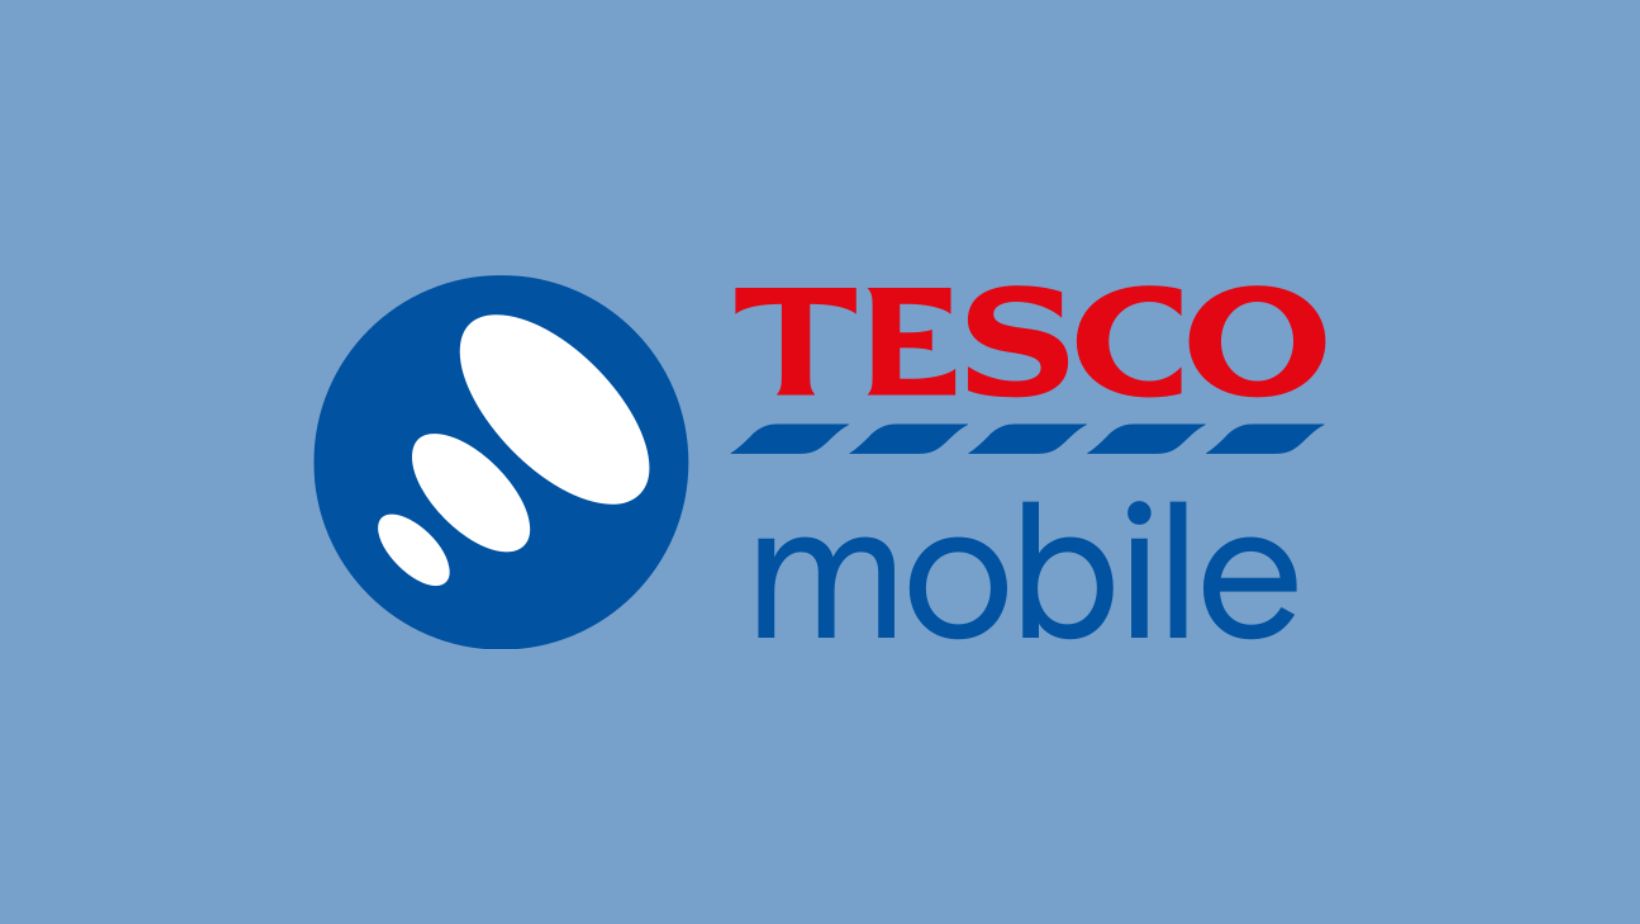 The best Tesco Mobile deals